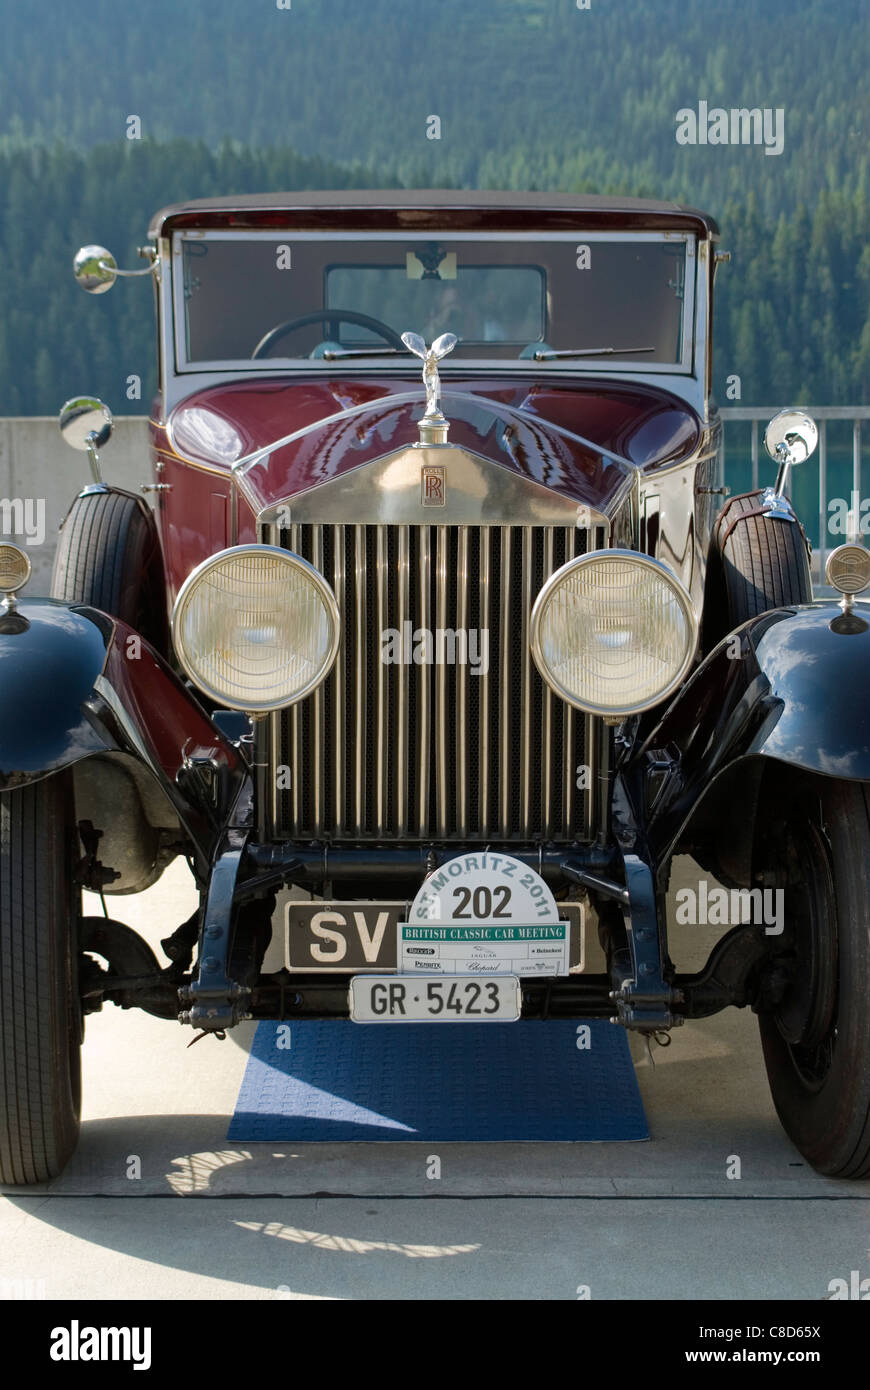 Rolls Royce Phantom Vintage Car Closeup während der British Classic Car Meeting St.Moritz, Schweiz. Stockfoto